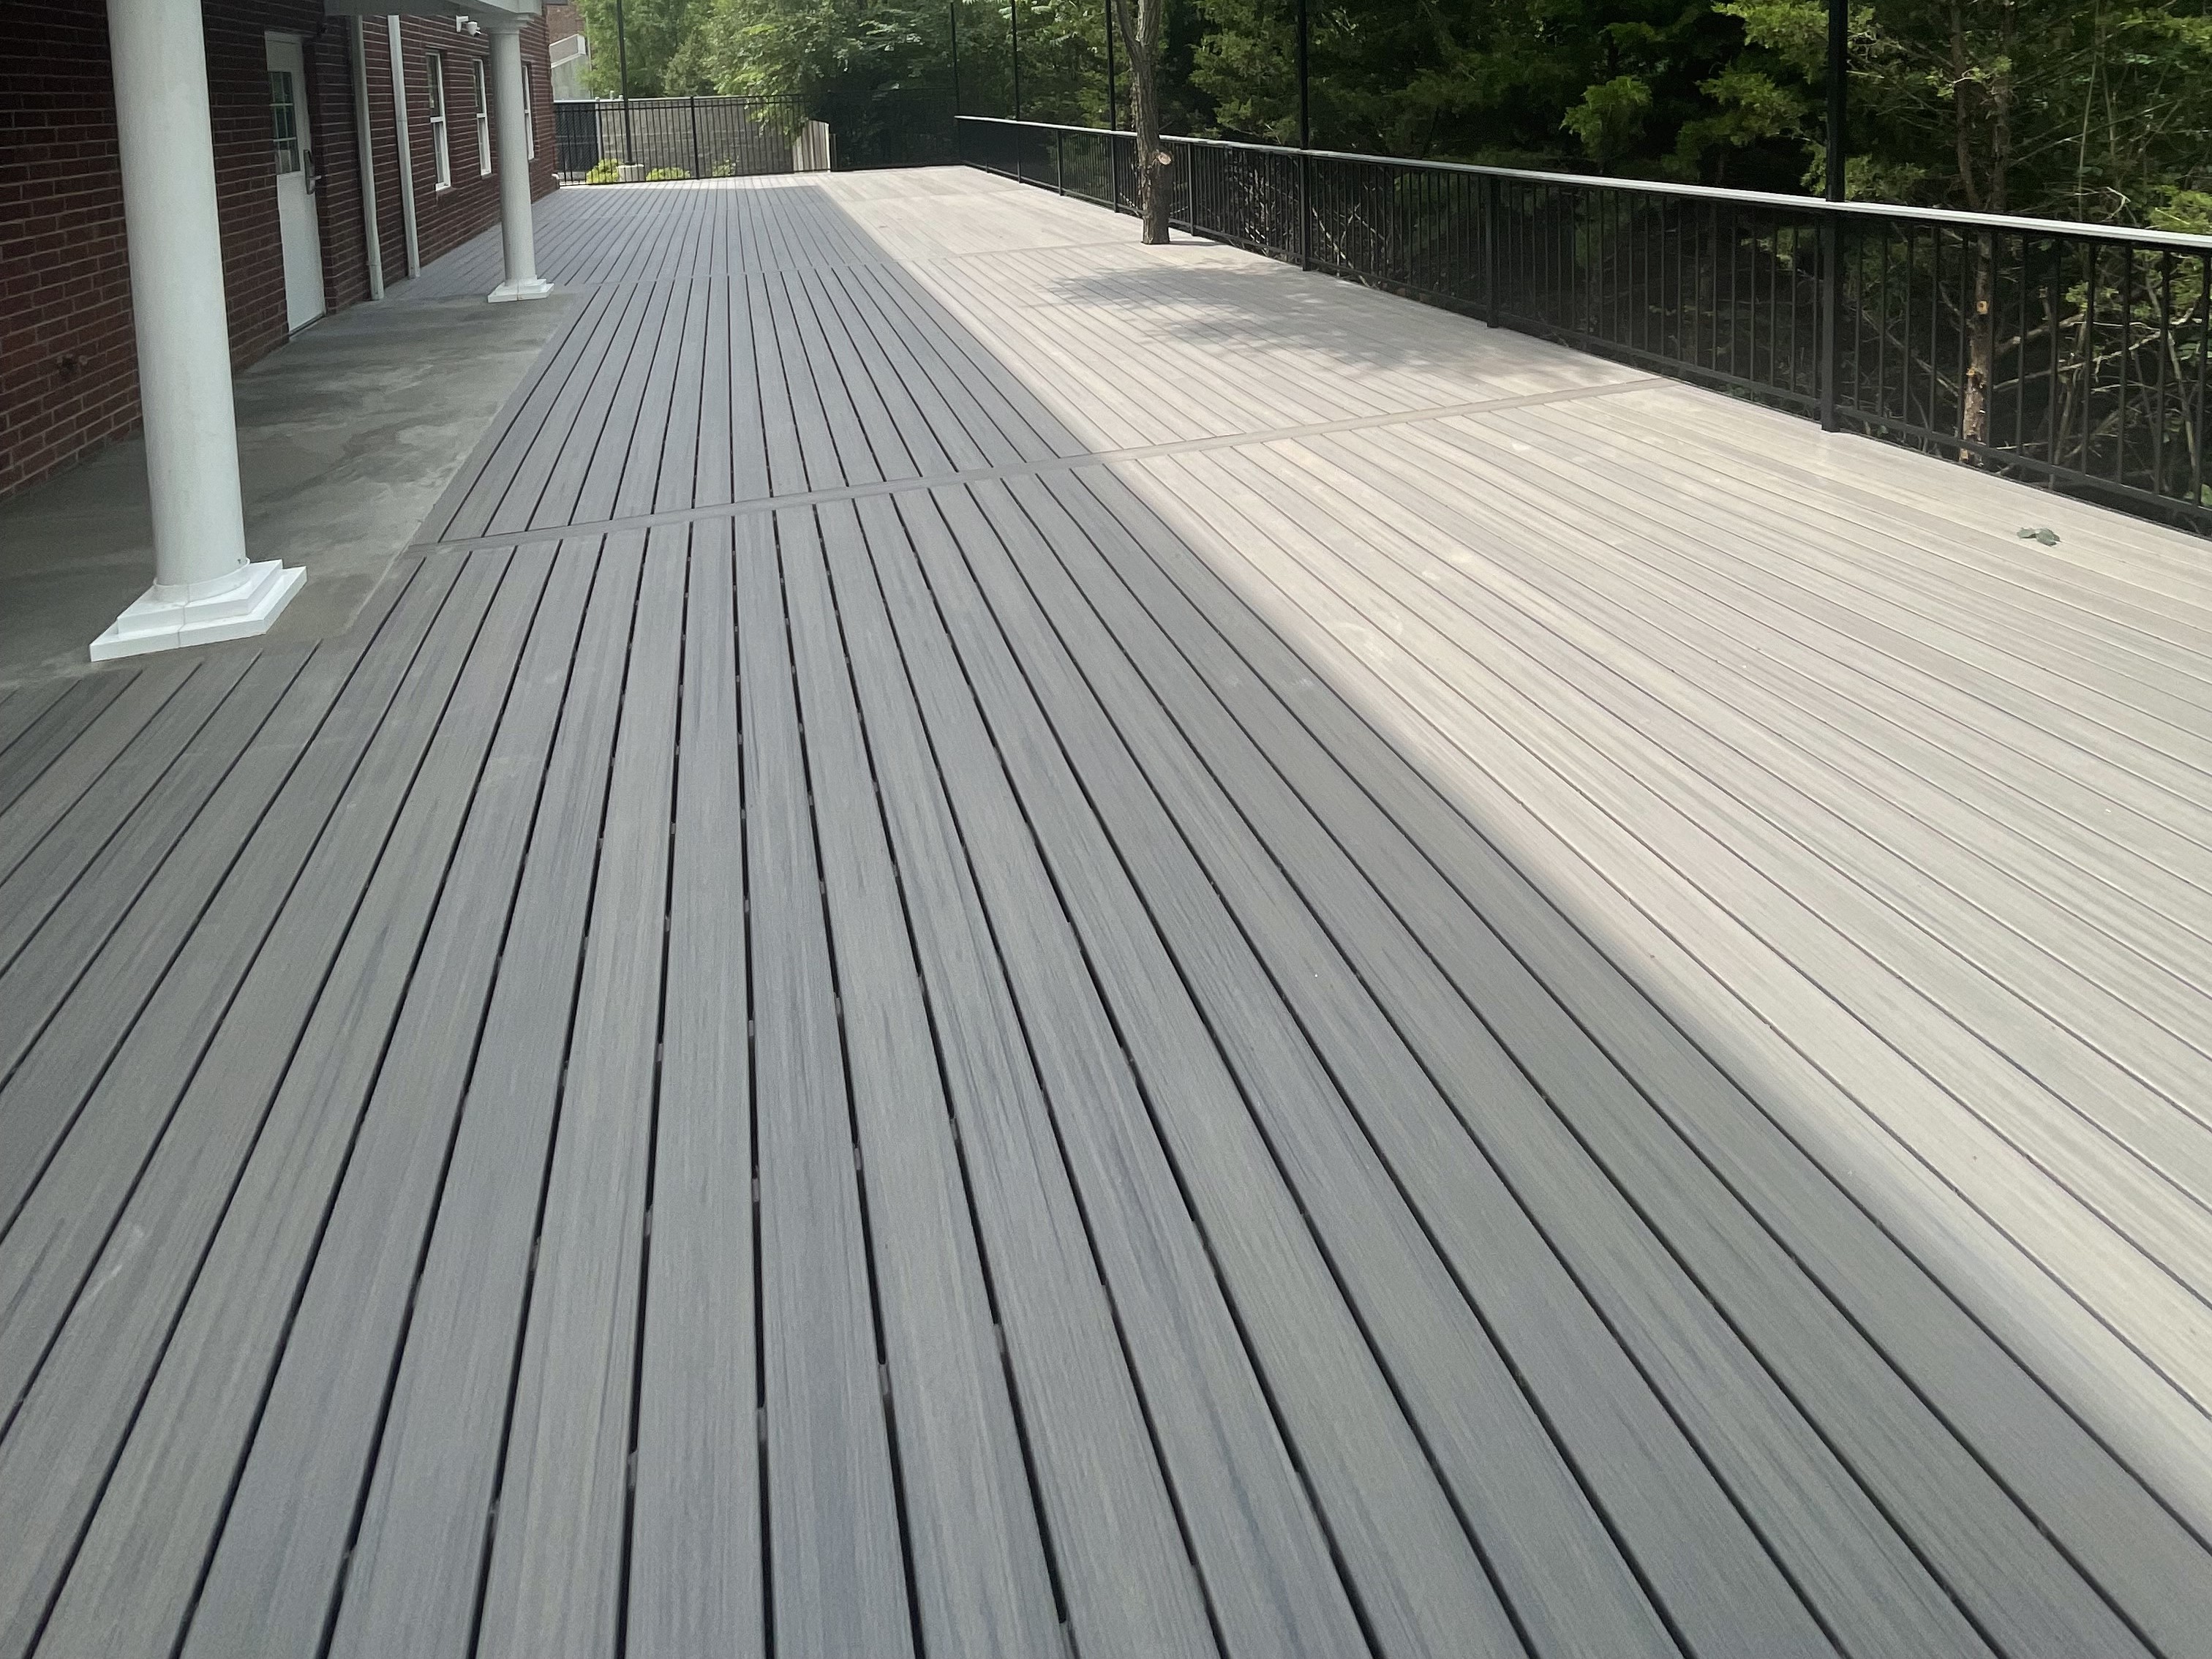 light gray deck floor with black steel railing around it